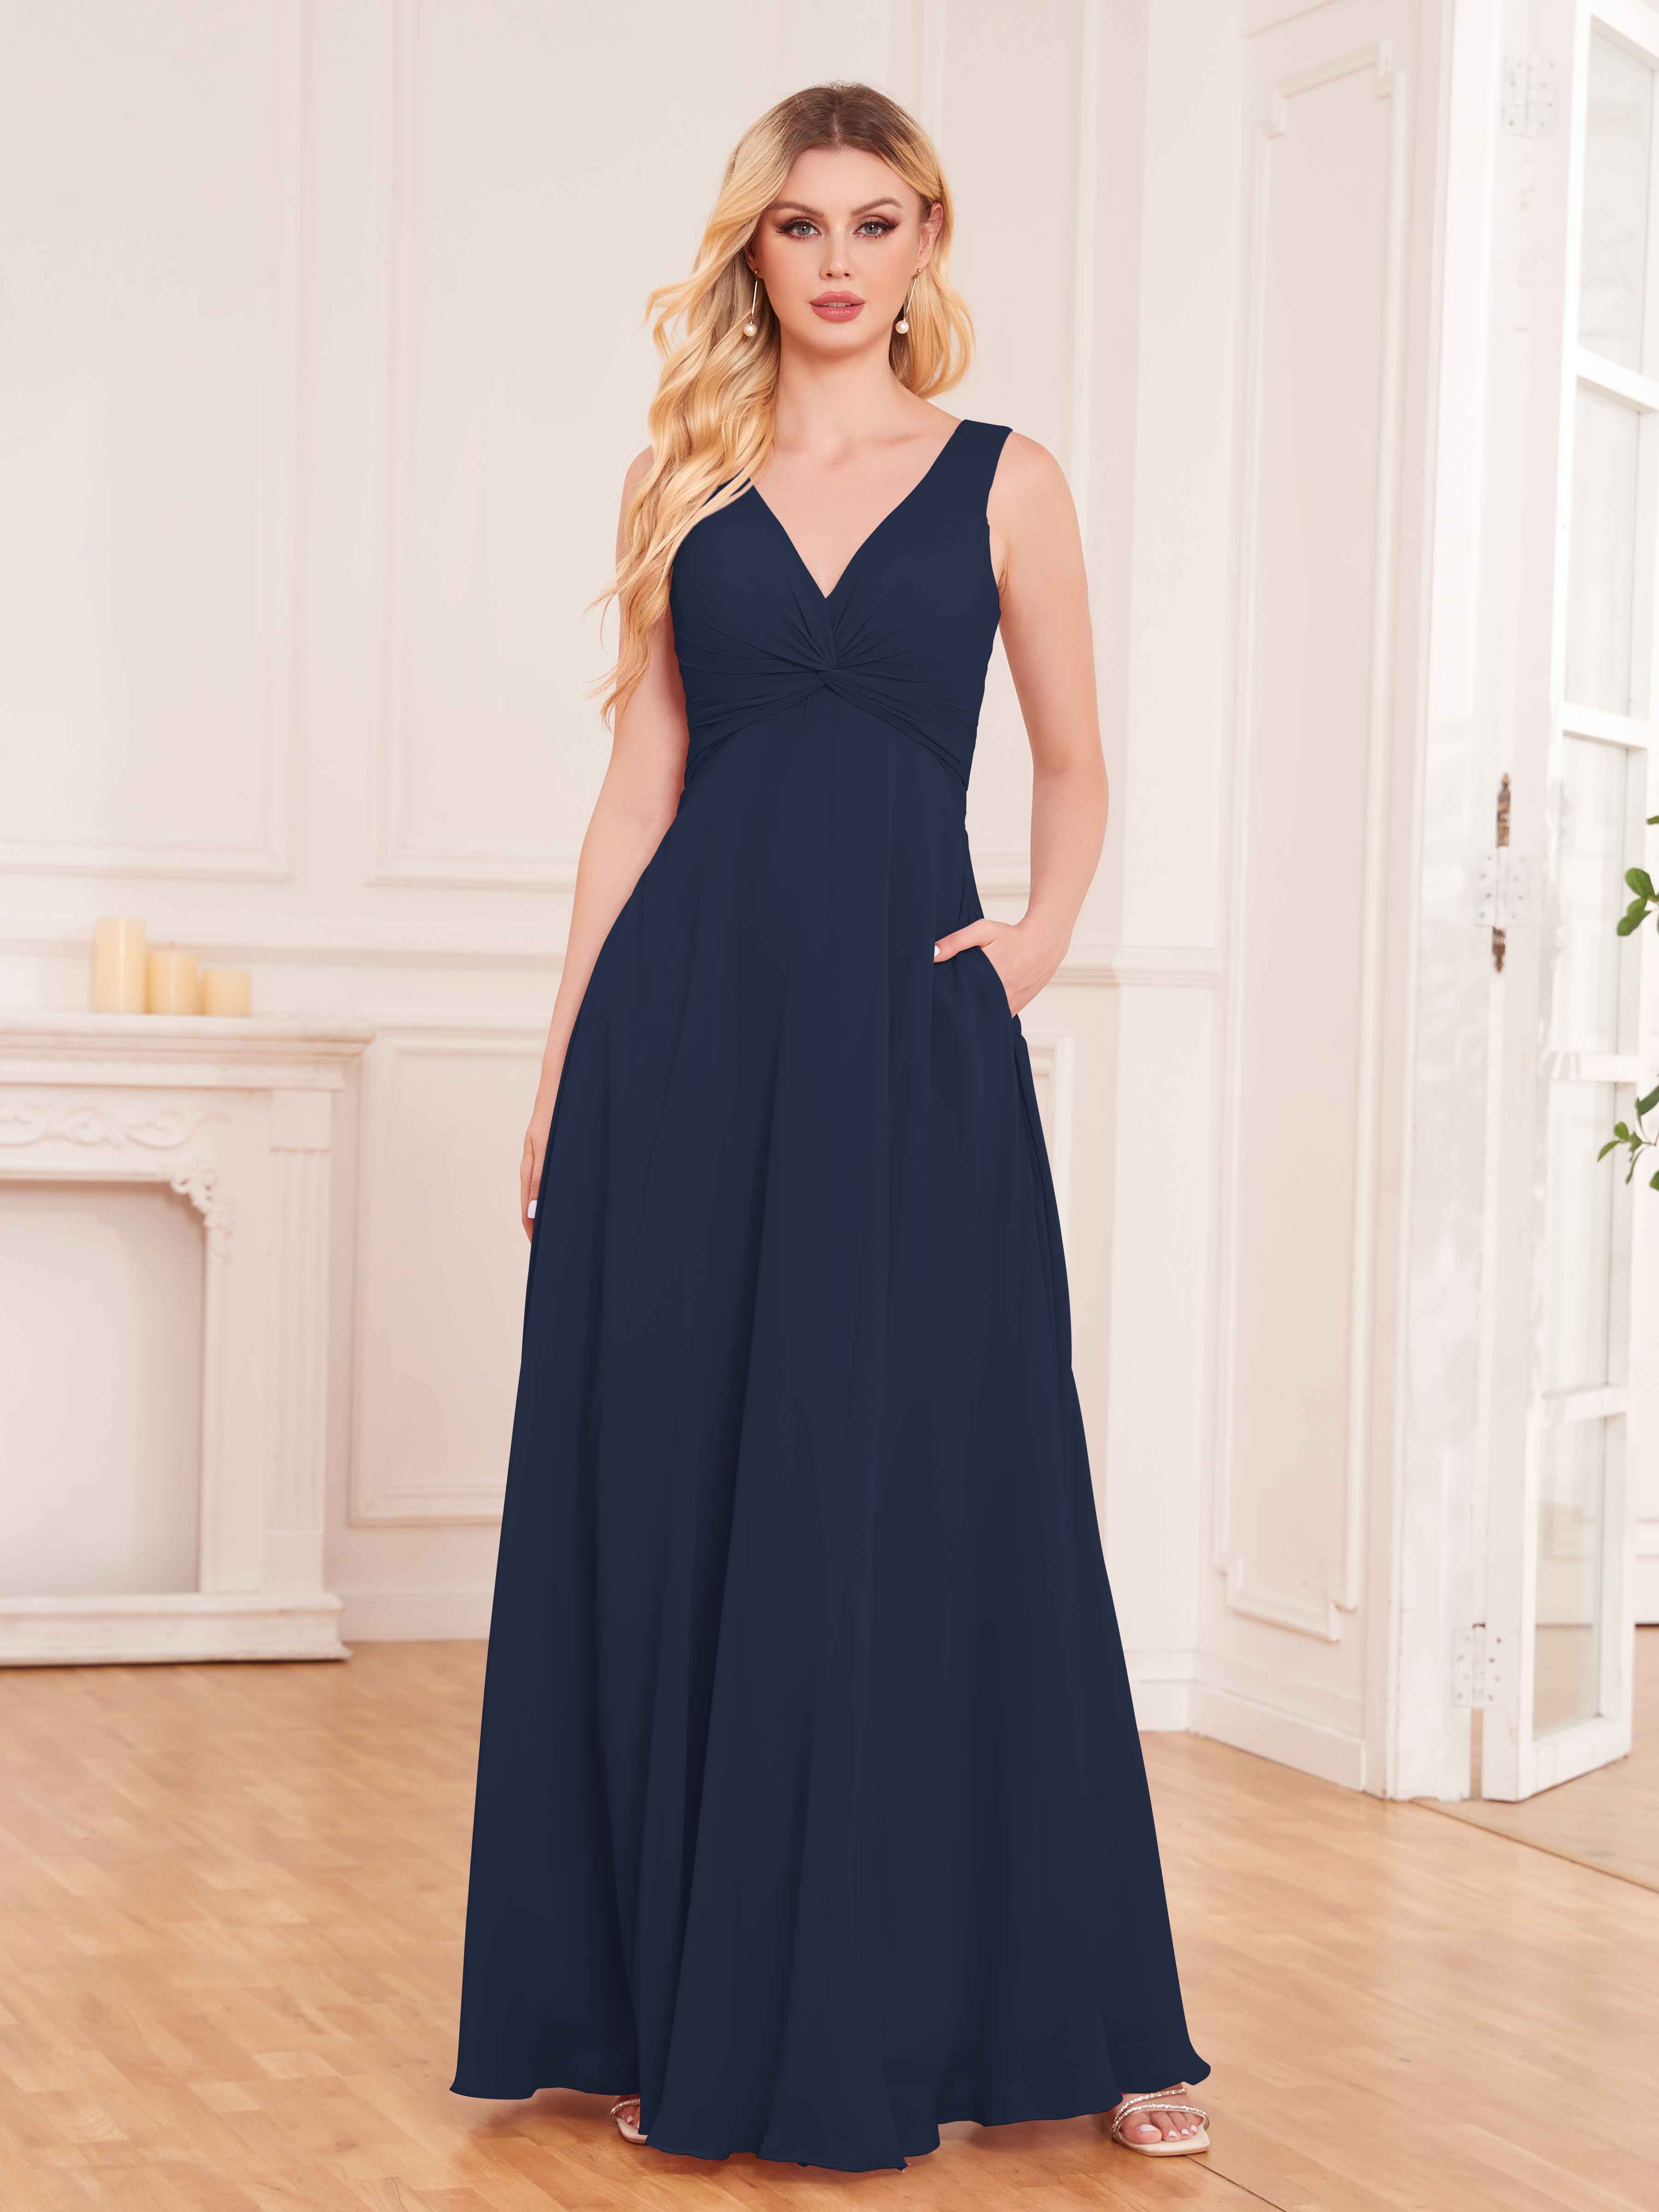 Melanie Spaghetti Strap Formal Bridesmaids Dress in Navy - Formal